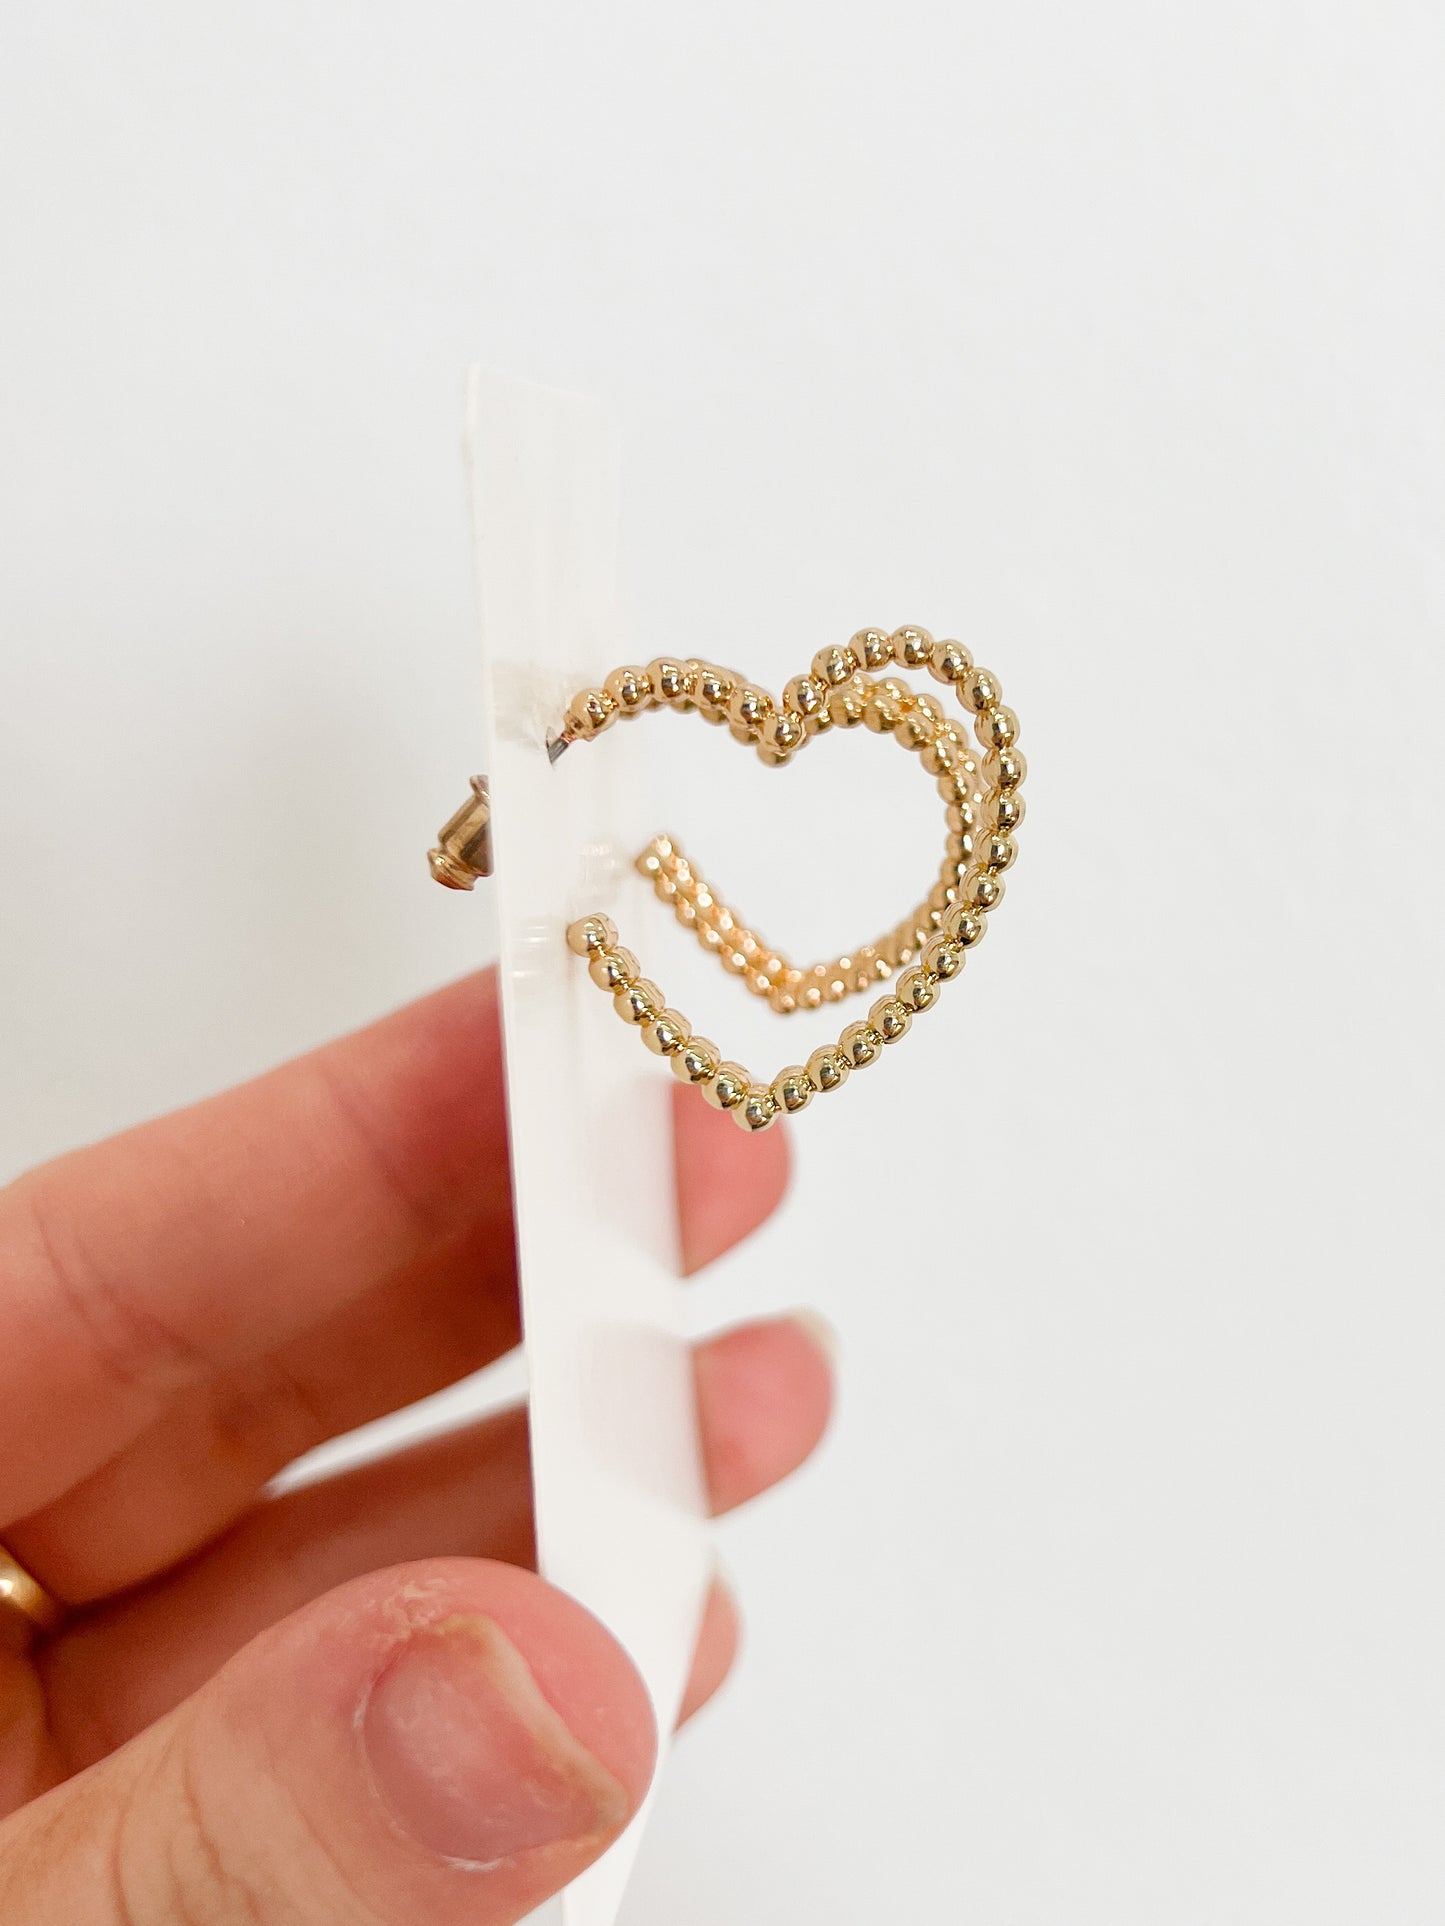 Gold Heart Valentine's Earrings, Gold Heart Hoop Earrings, Gold Ball Heart Earrings